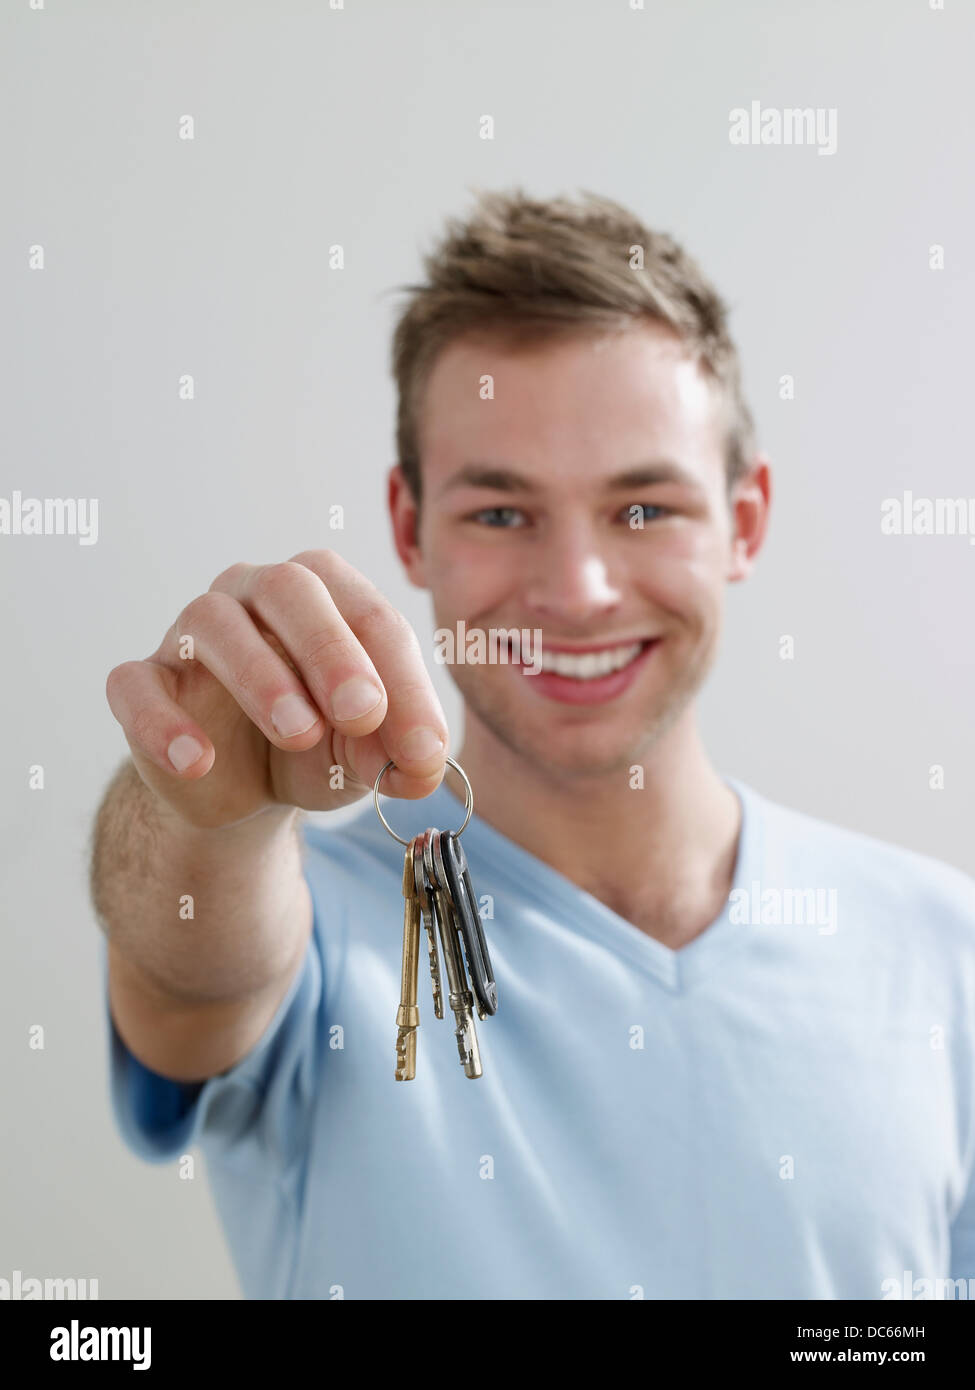 man holding house keys Stock Photo